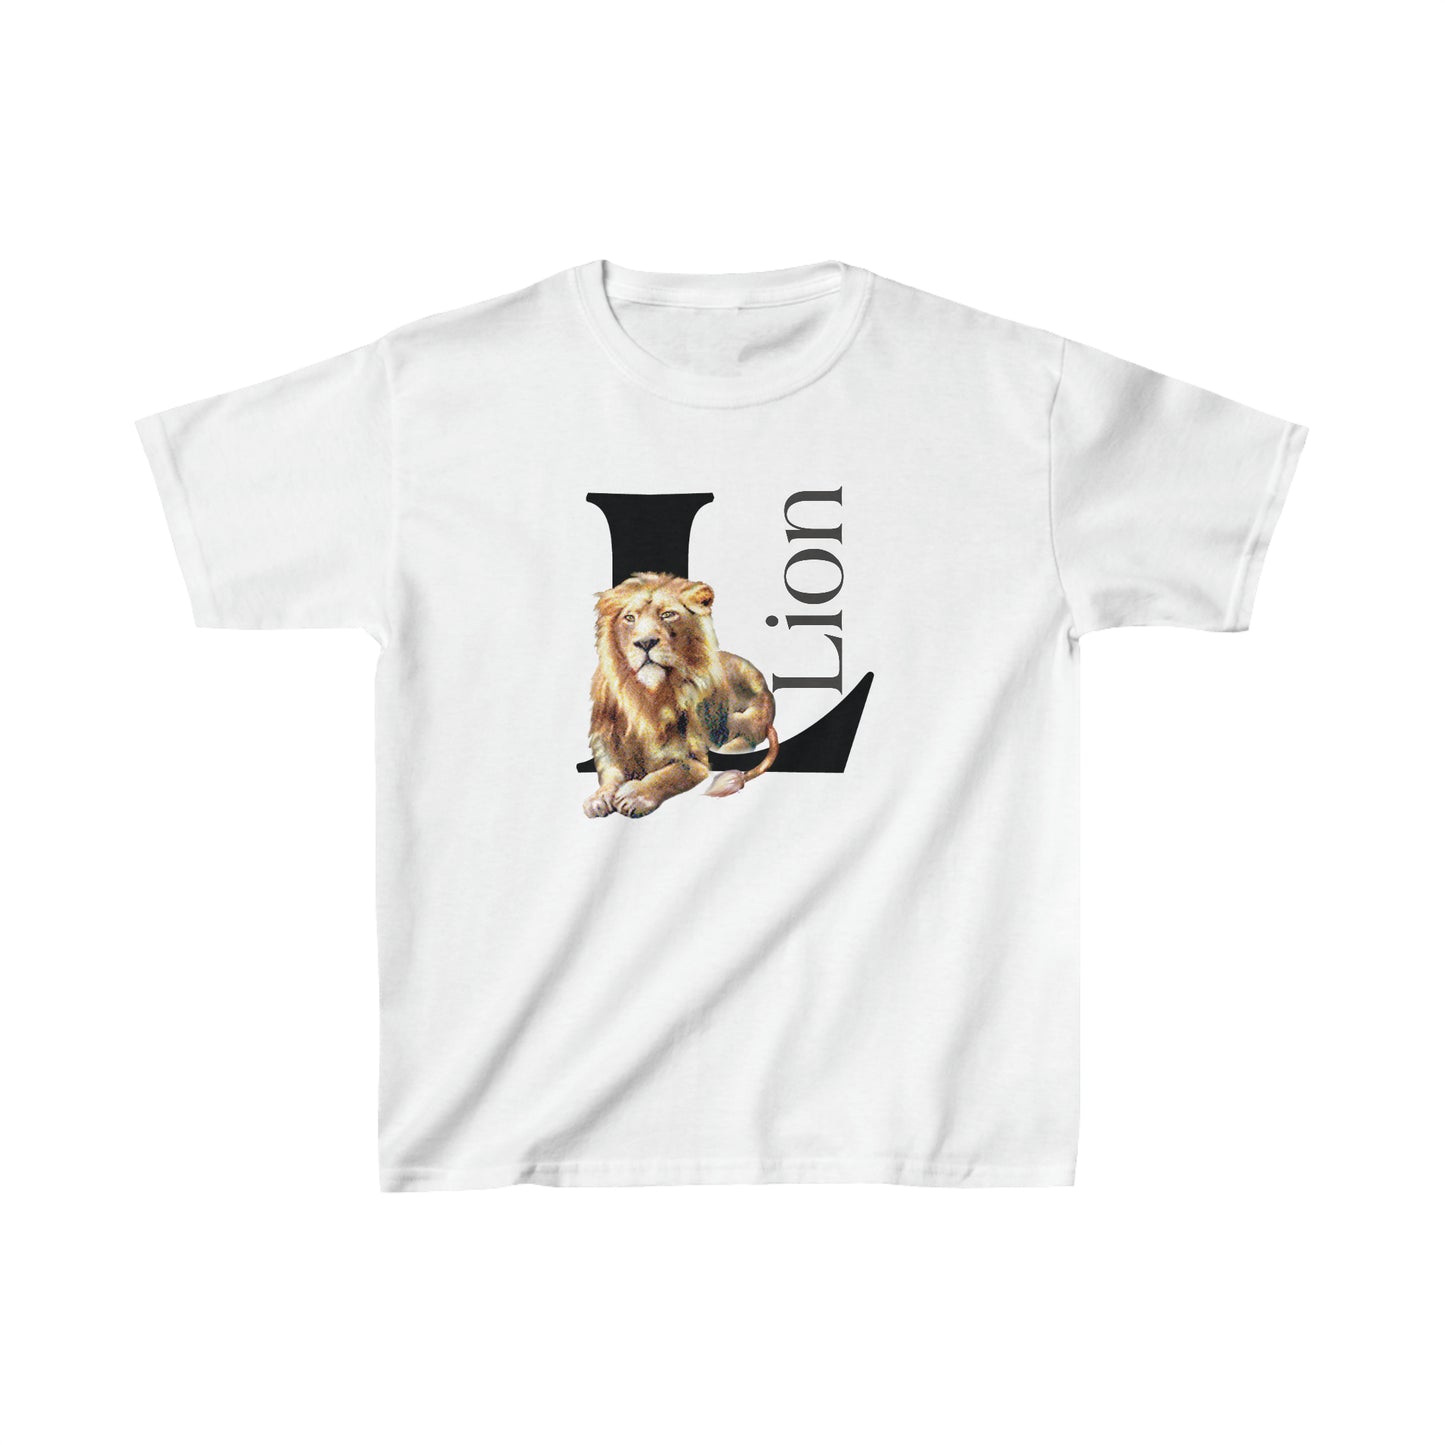 L is for Lion T-Shirt, Lion Drawing T-Shirt, Illustration of Lion, Proud Lion animal t-shirt, animal alphabet T, animal letters Tee